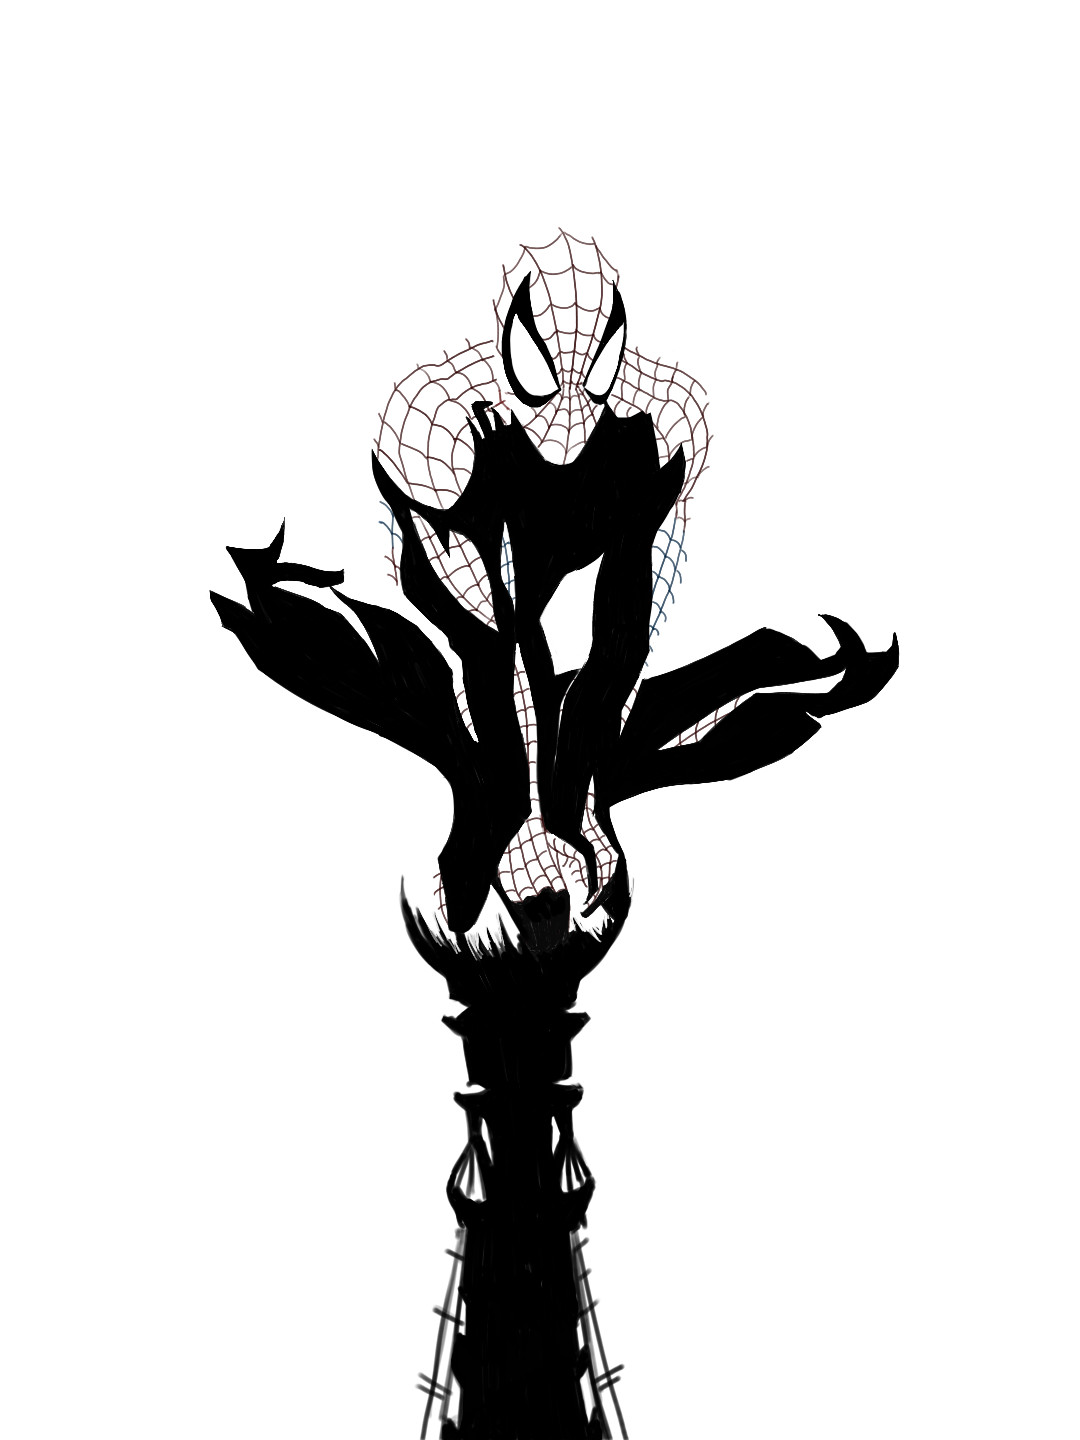 Daily Cartoon Drawings - Drawing Spider Man